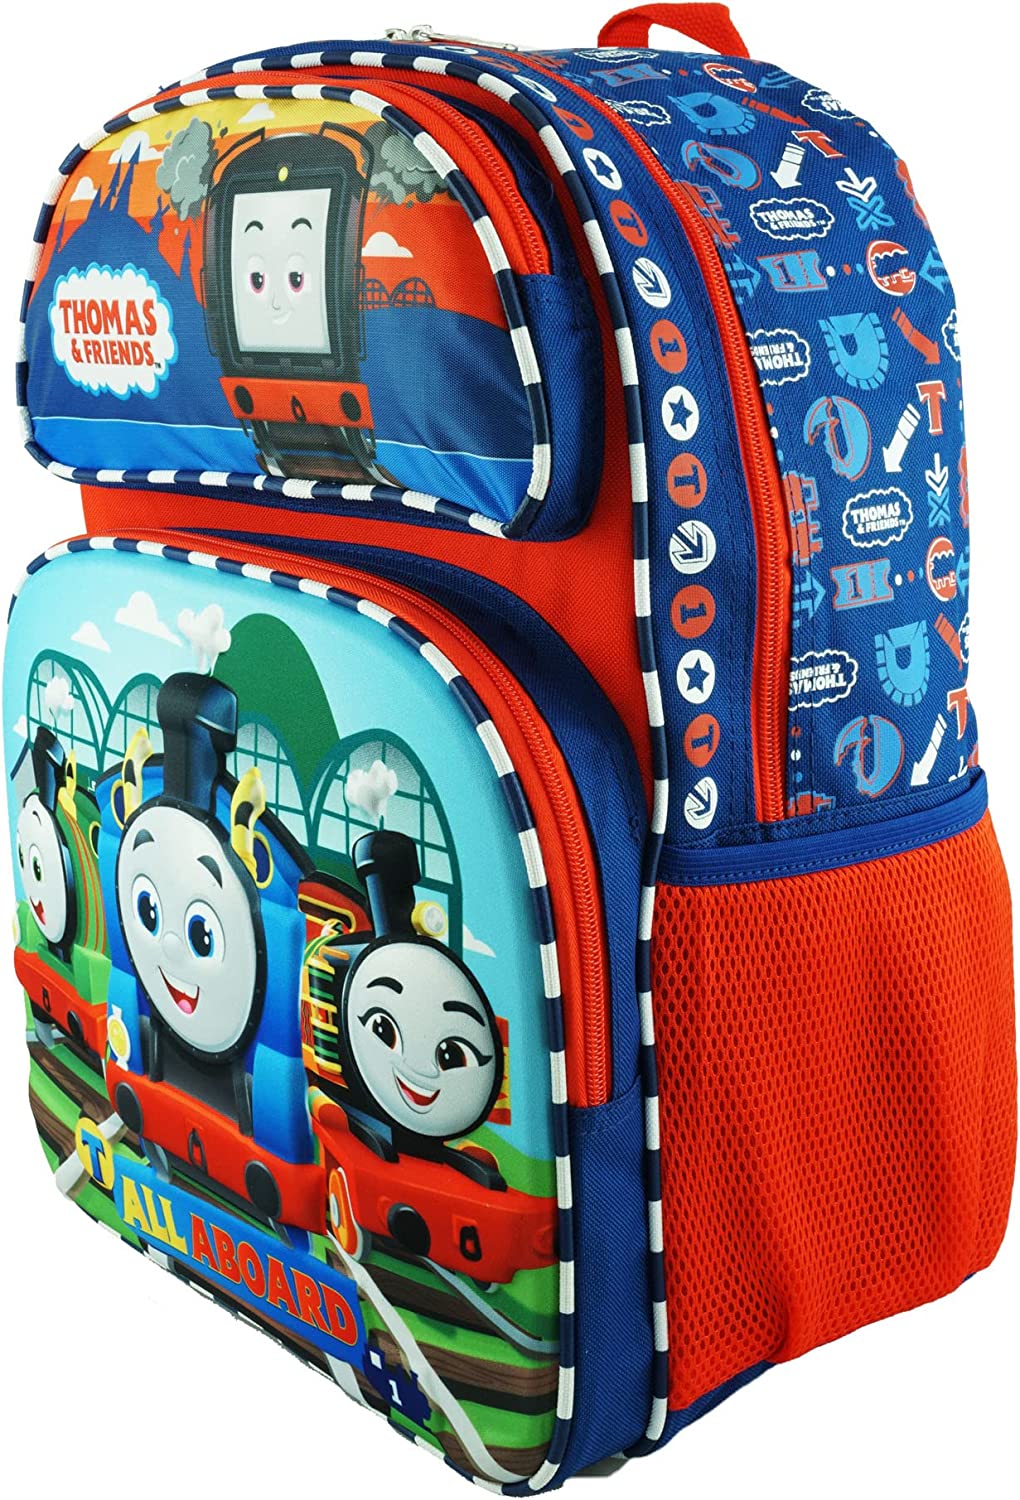 Thomas and Friends Backpack 3-D EVA Molded 16 Inch - Thomas the Train BookBag